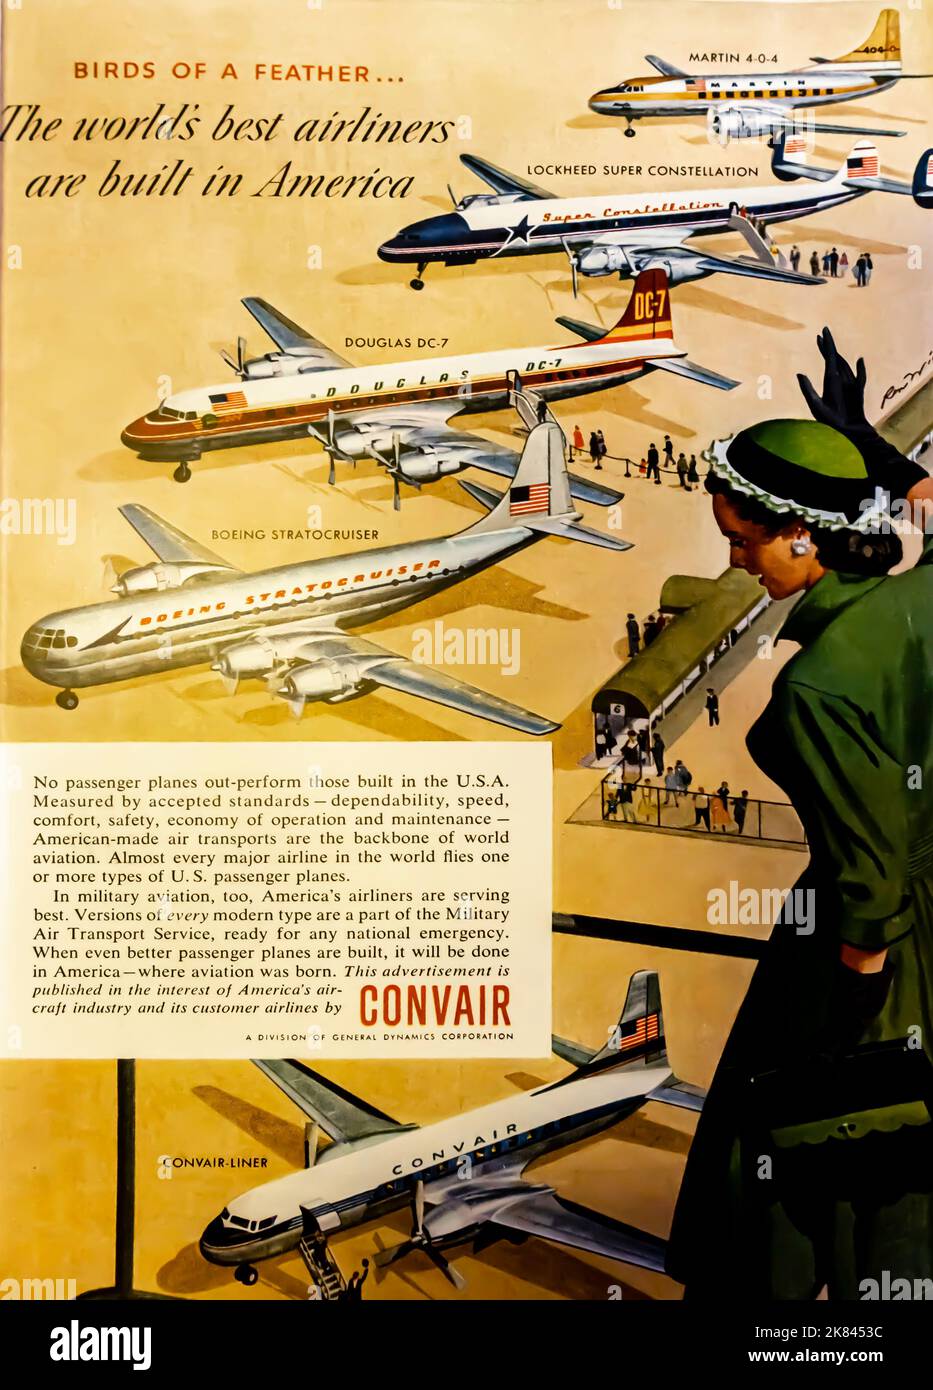 Convair airways advert in a NatGeo magazine, 1954 Stock Photo